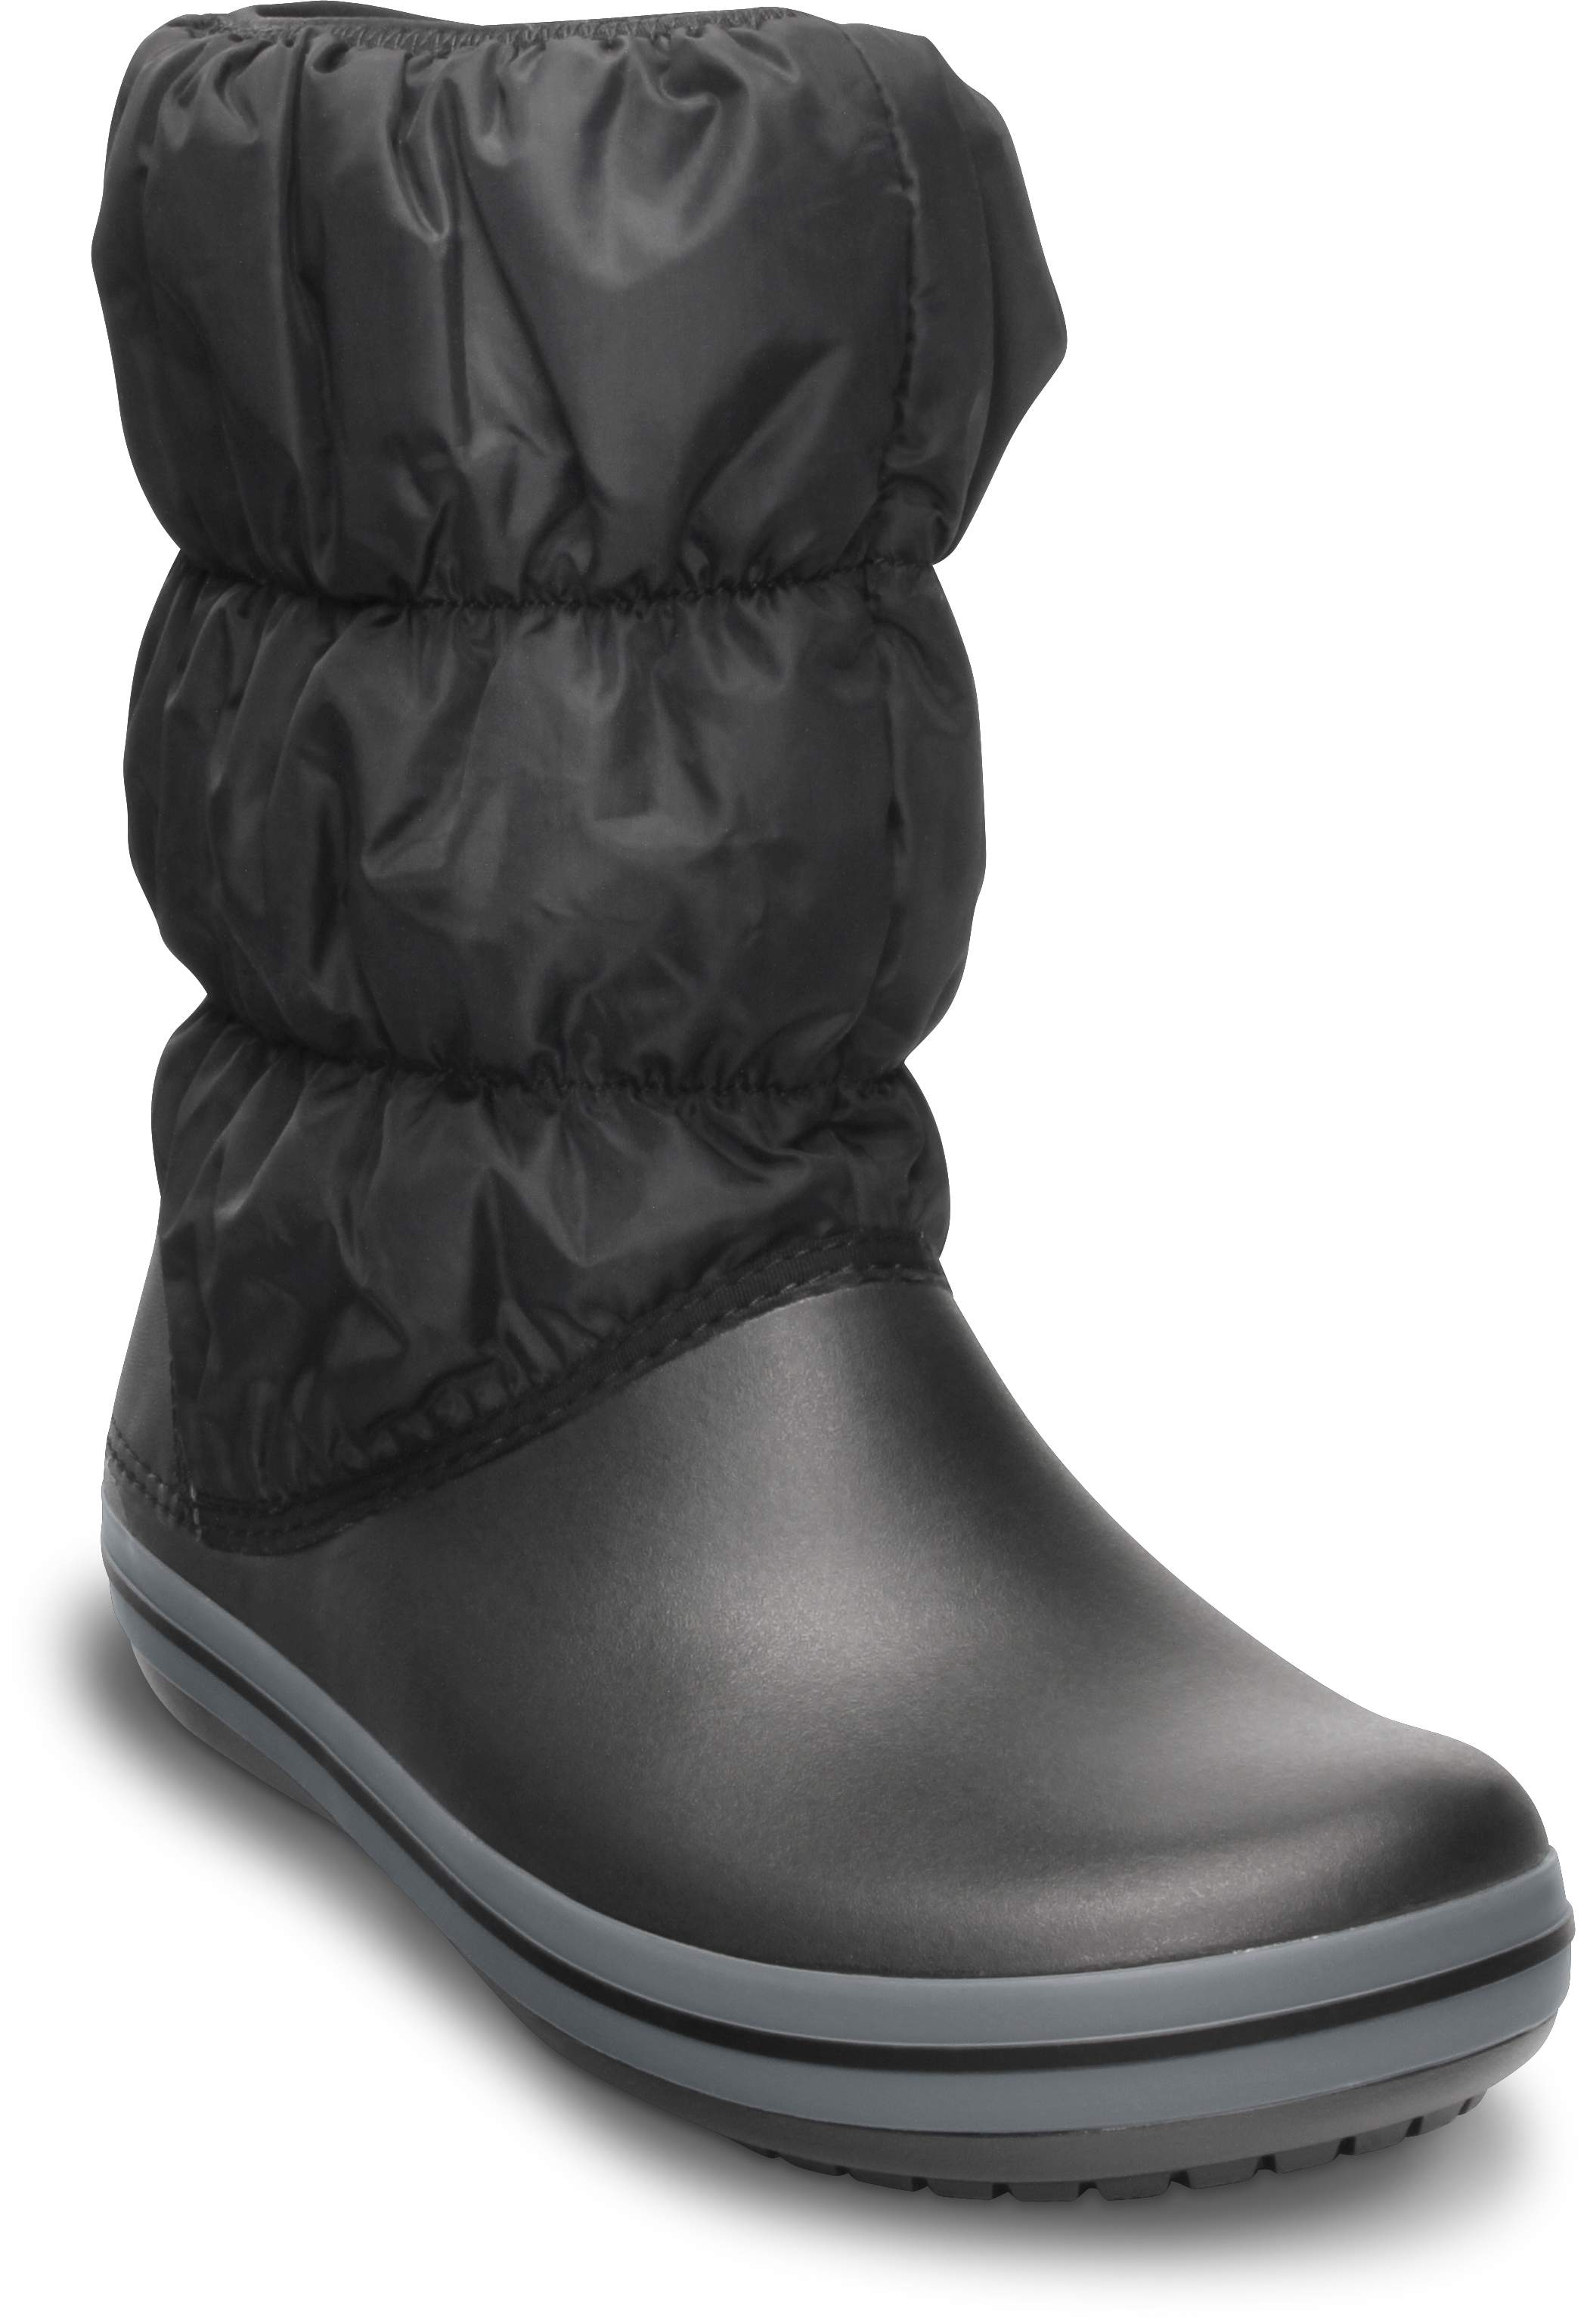 crocs women's winter puff boot